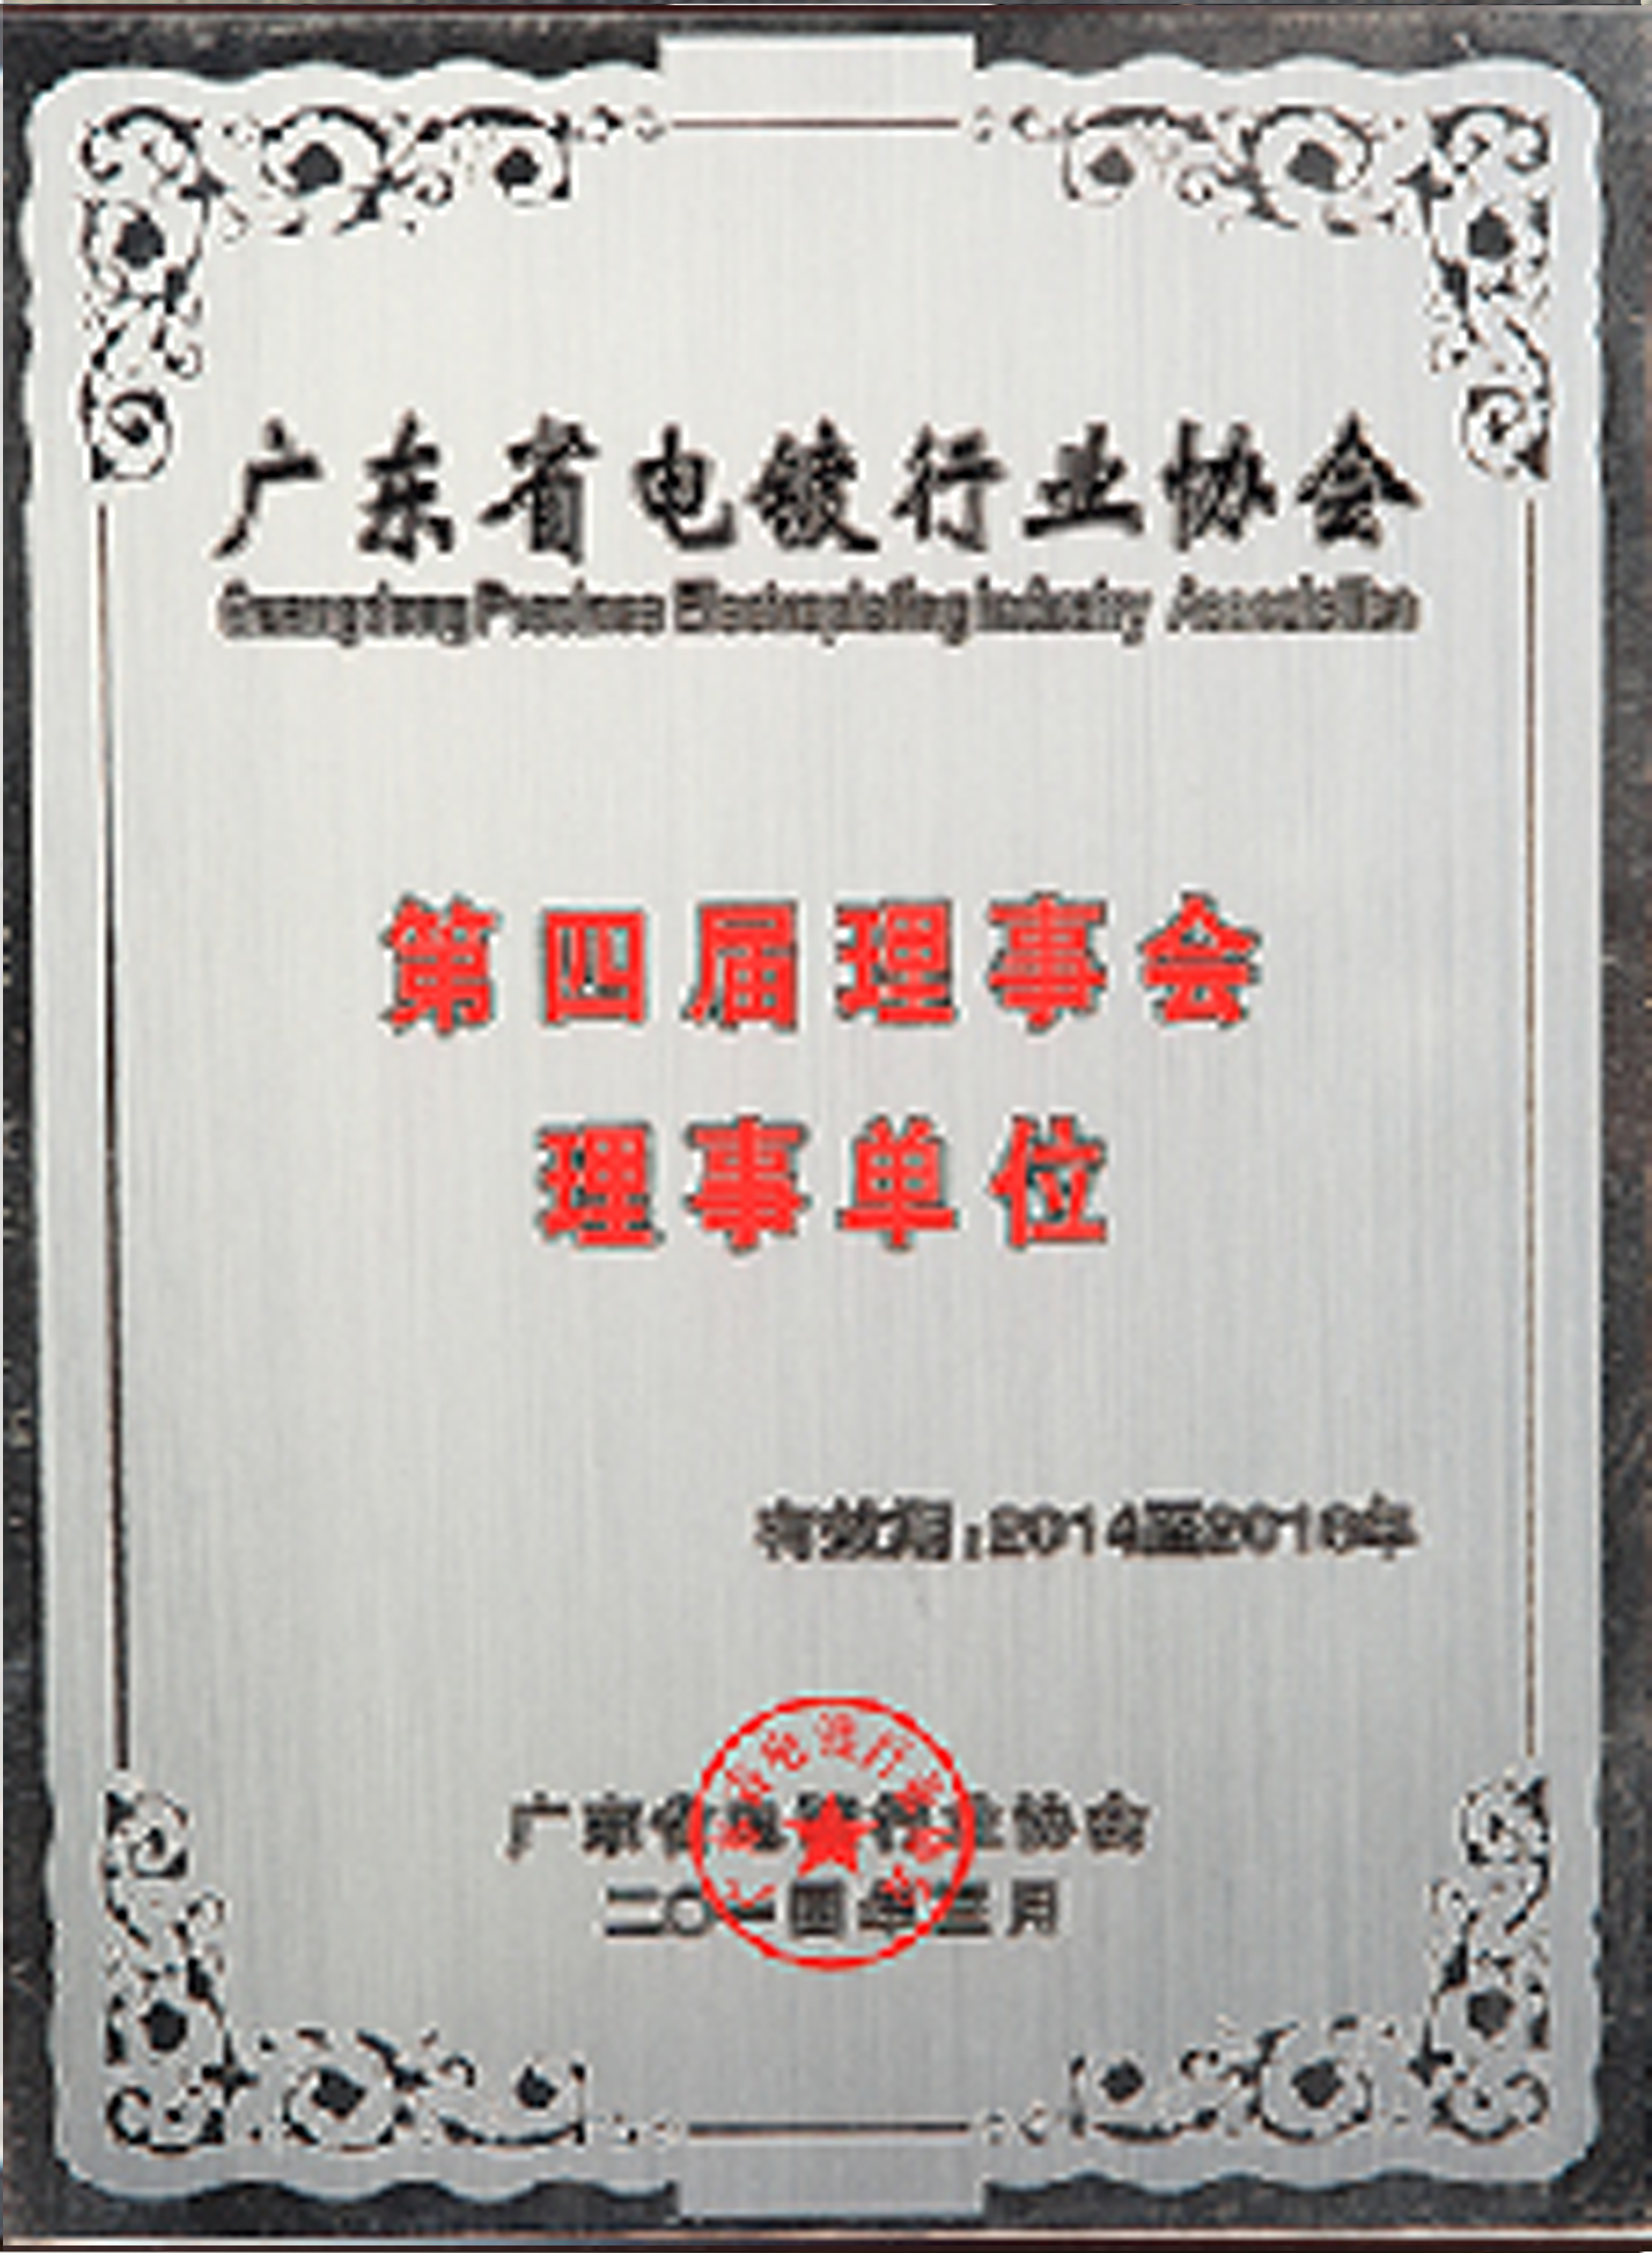 Industrial Unit Award